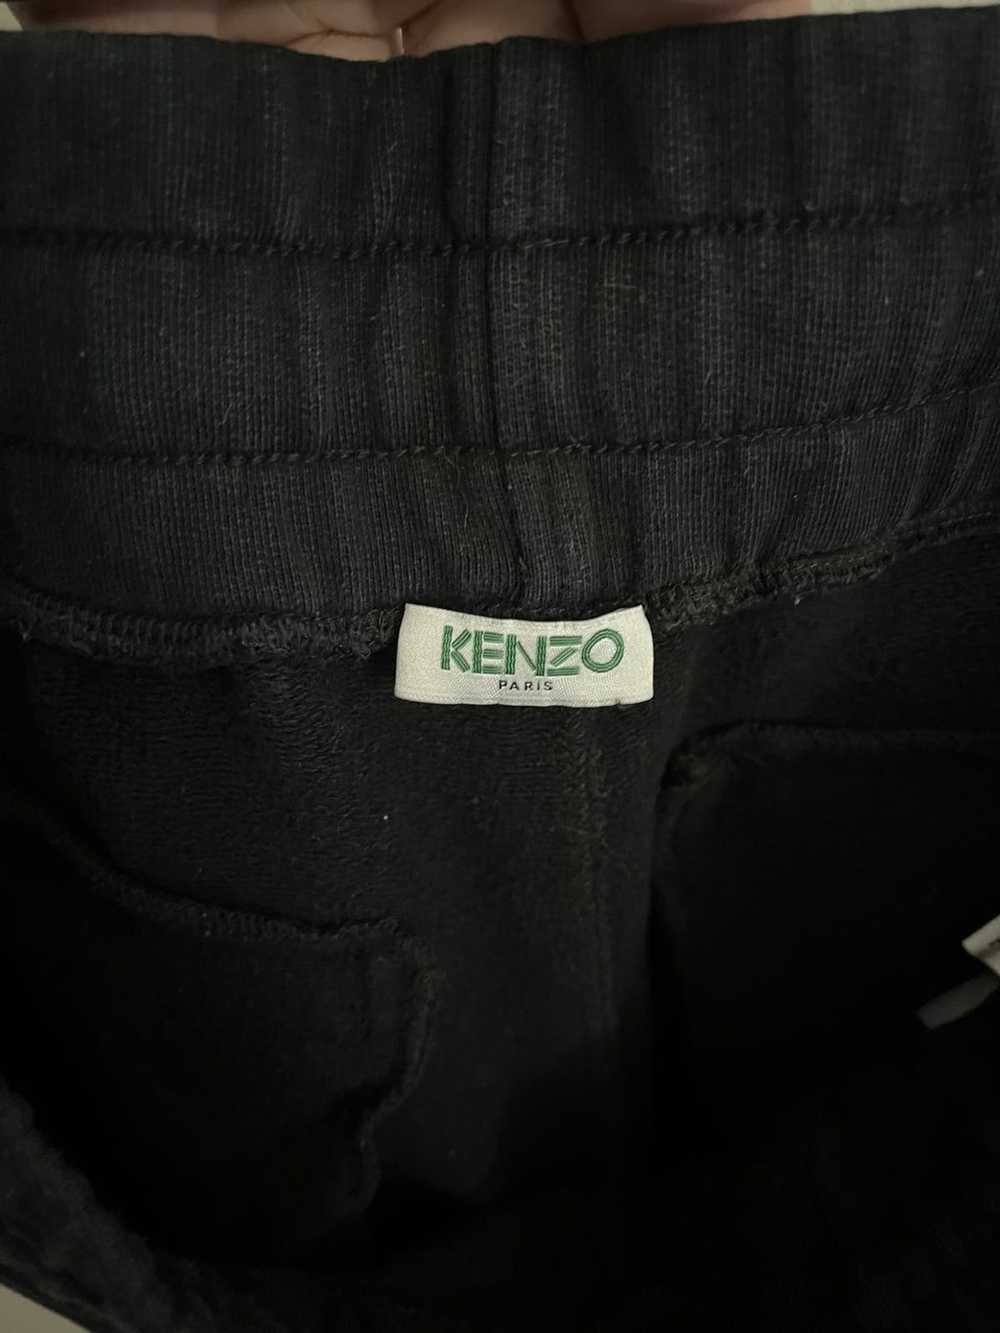 Kenzo Kenzo Paris Shorts black - image 3